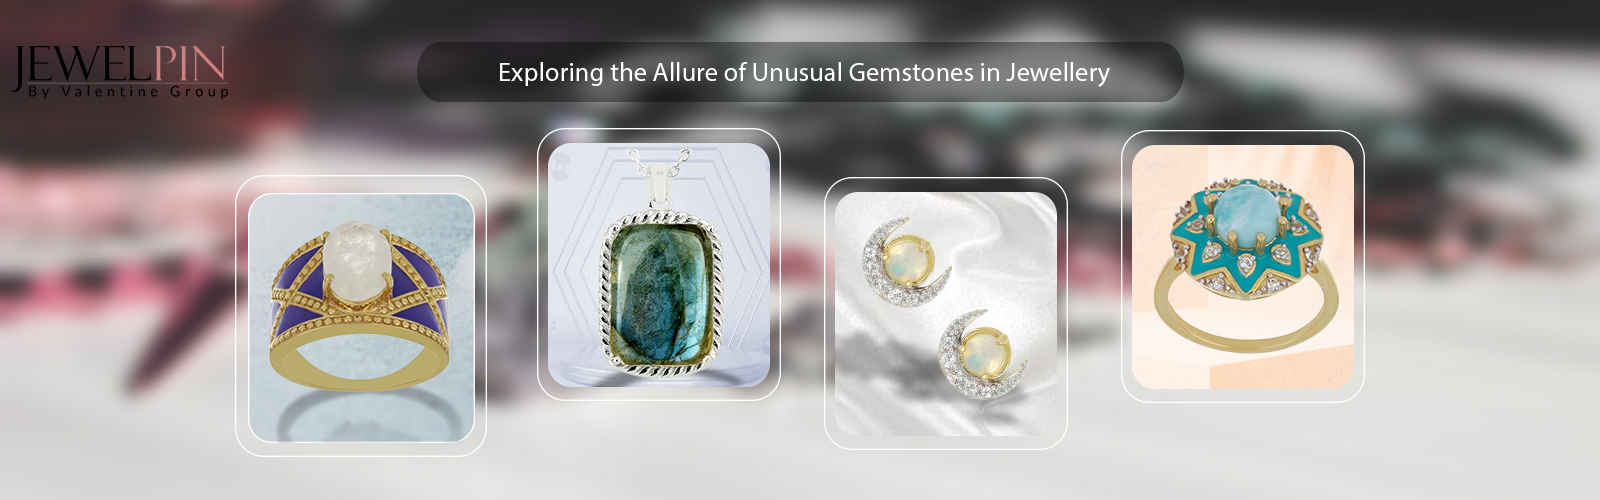 exploring the allure of unusual gemstones in jewellery